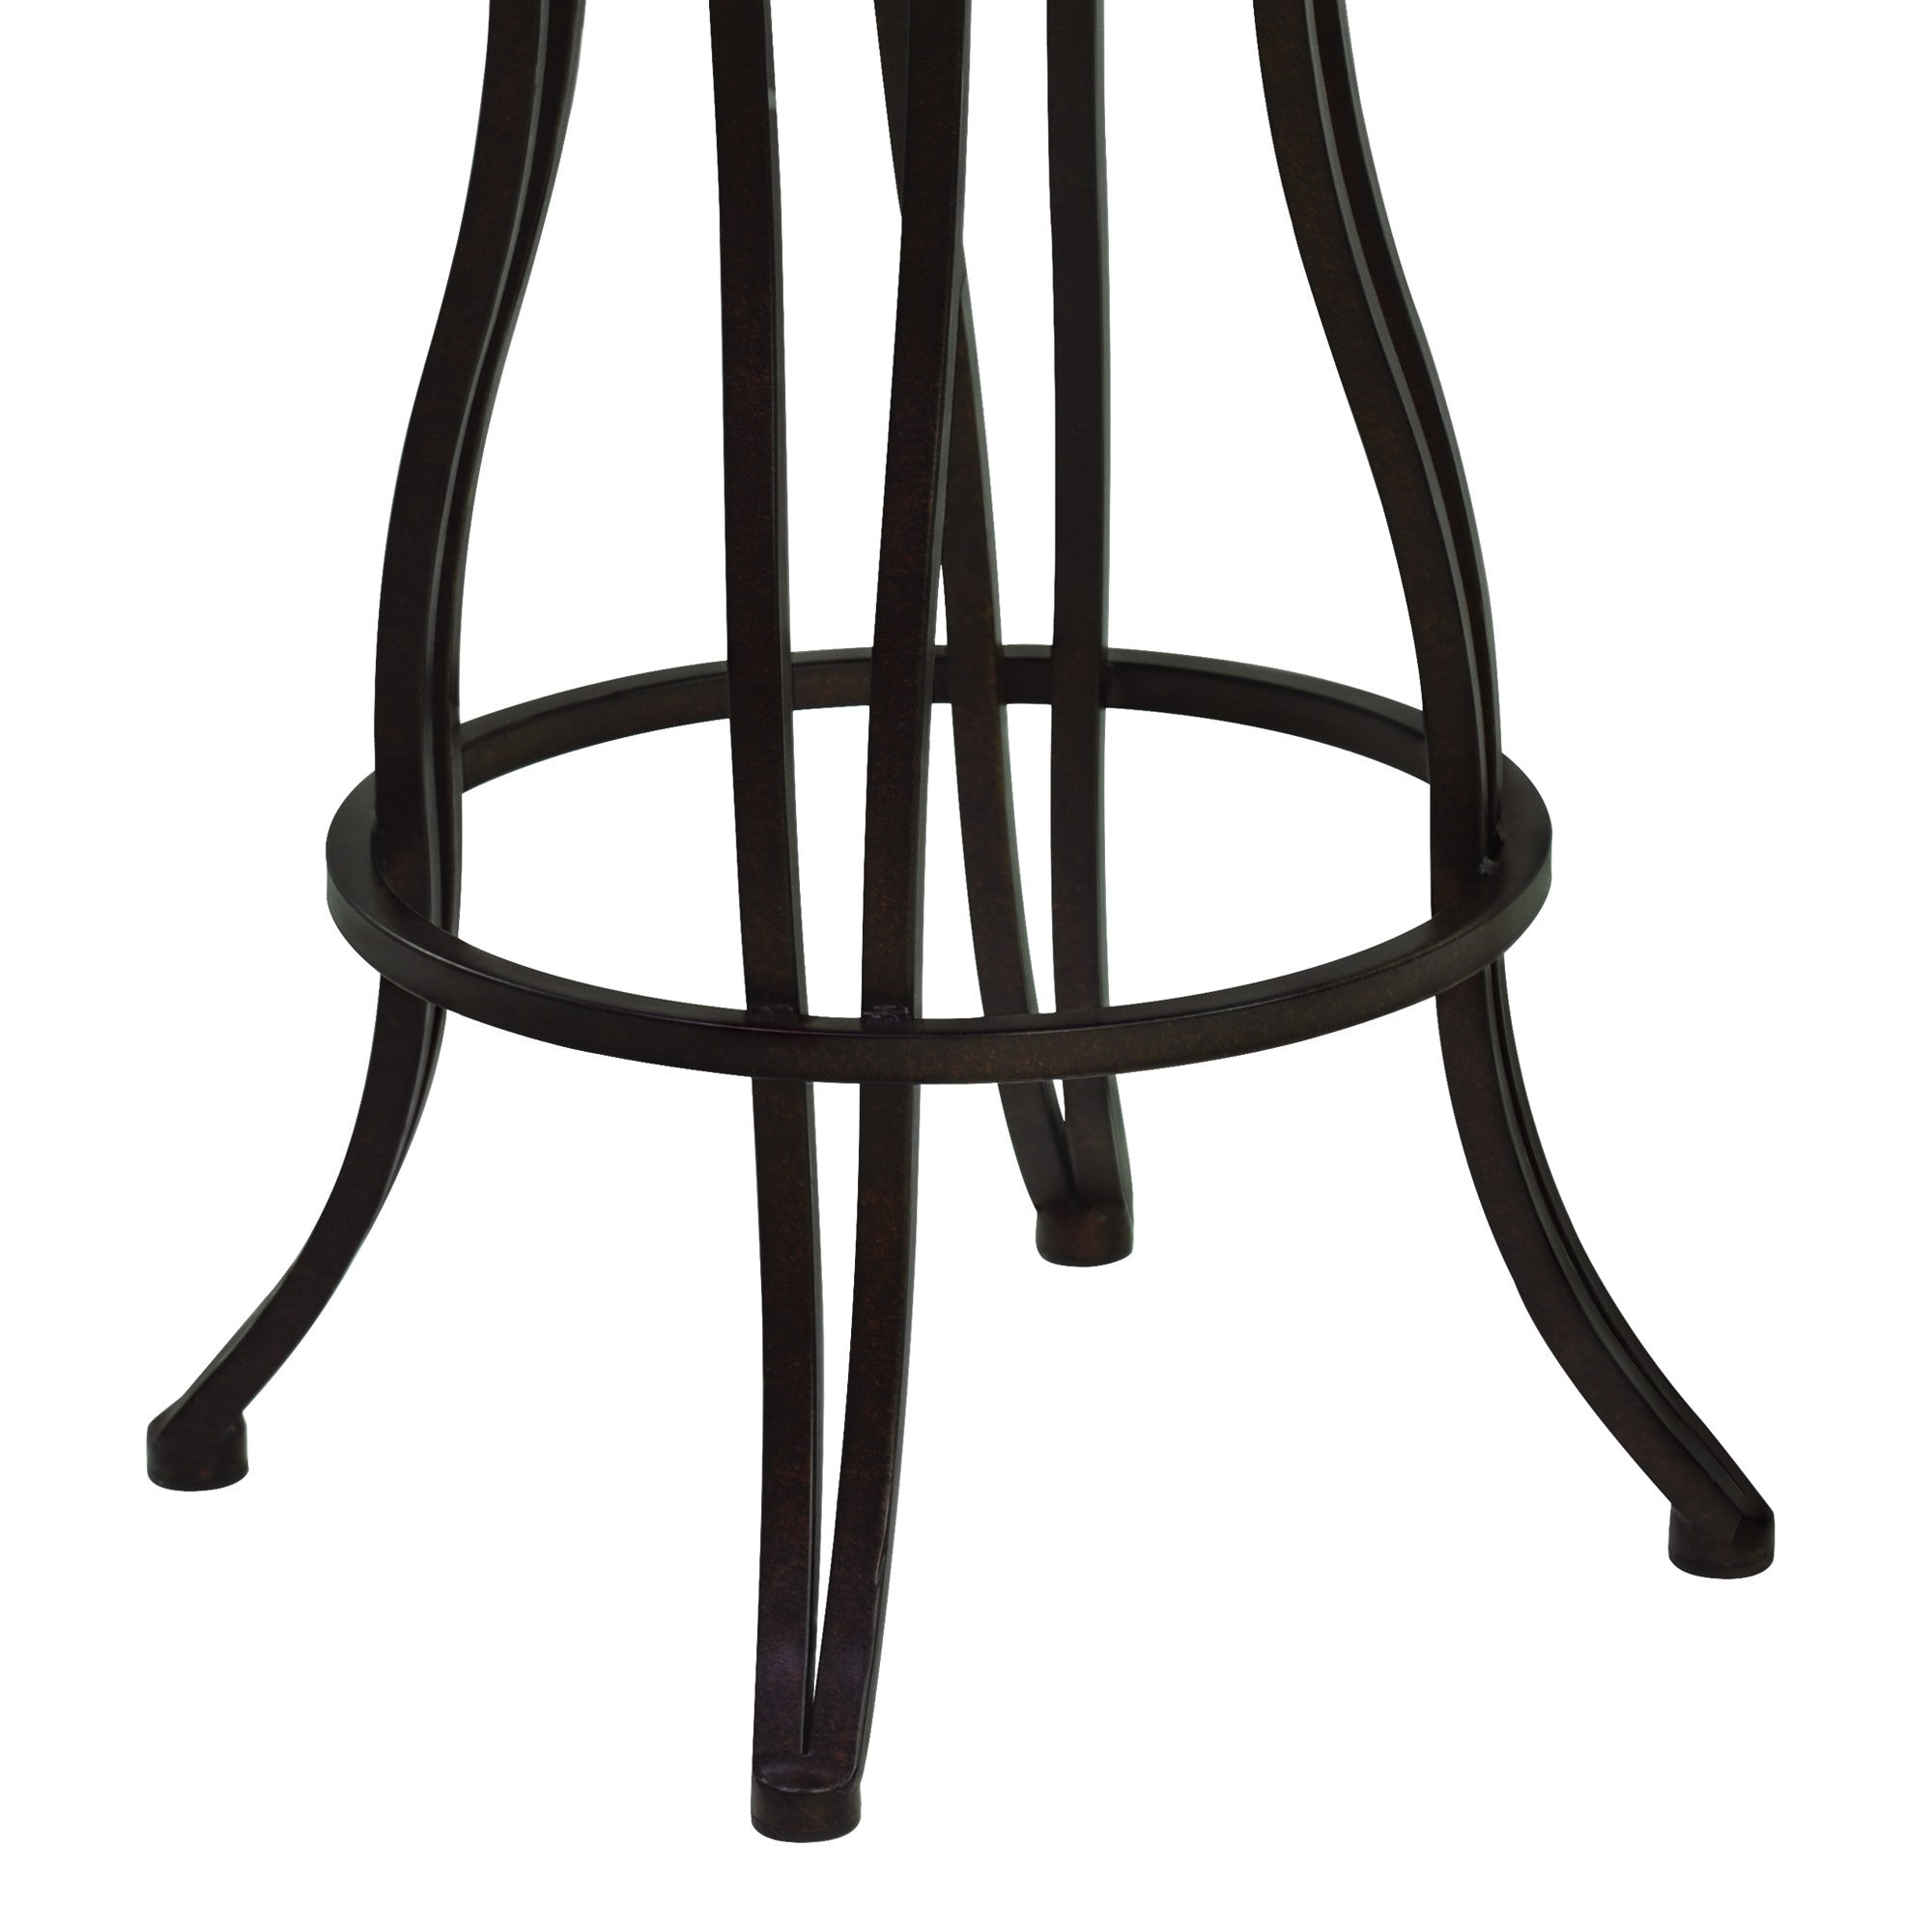 30" Espresso Iron Swivel Bar Height Bar Chair